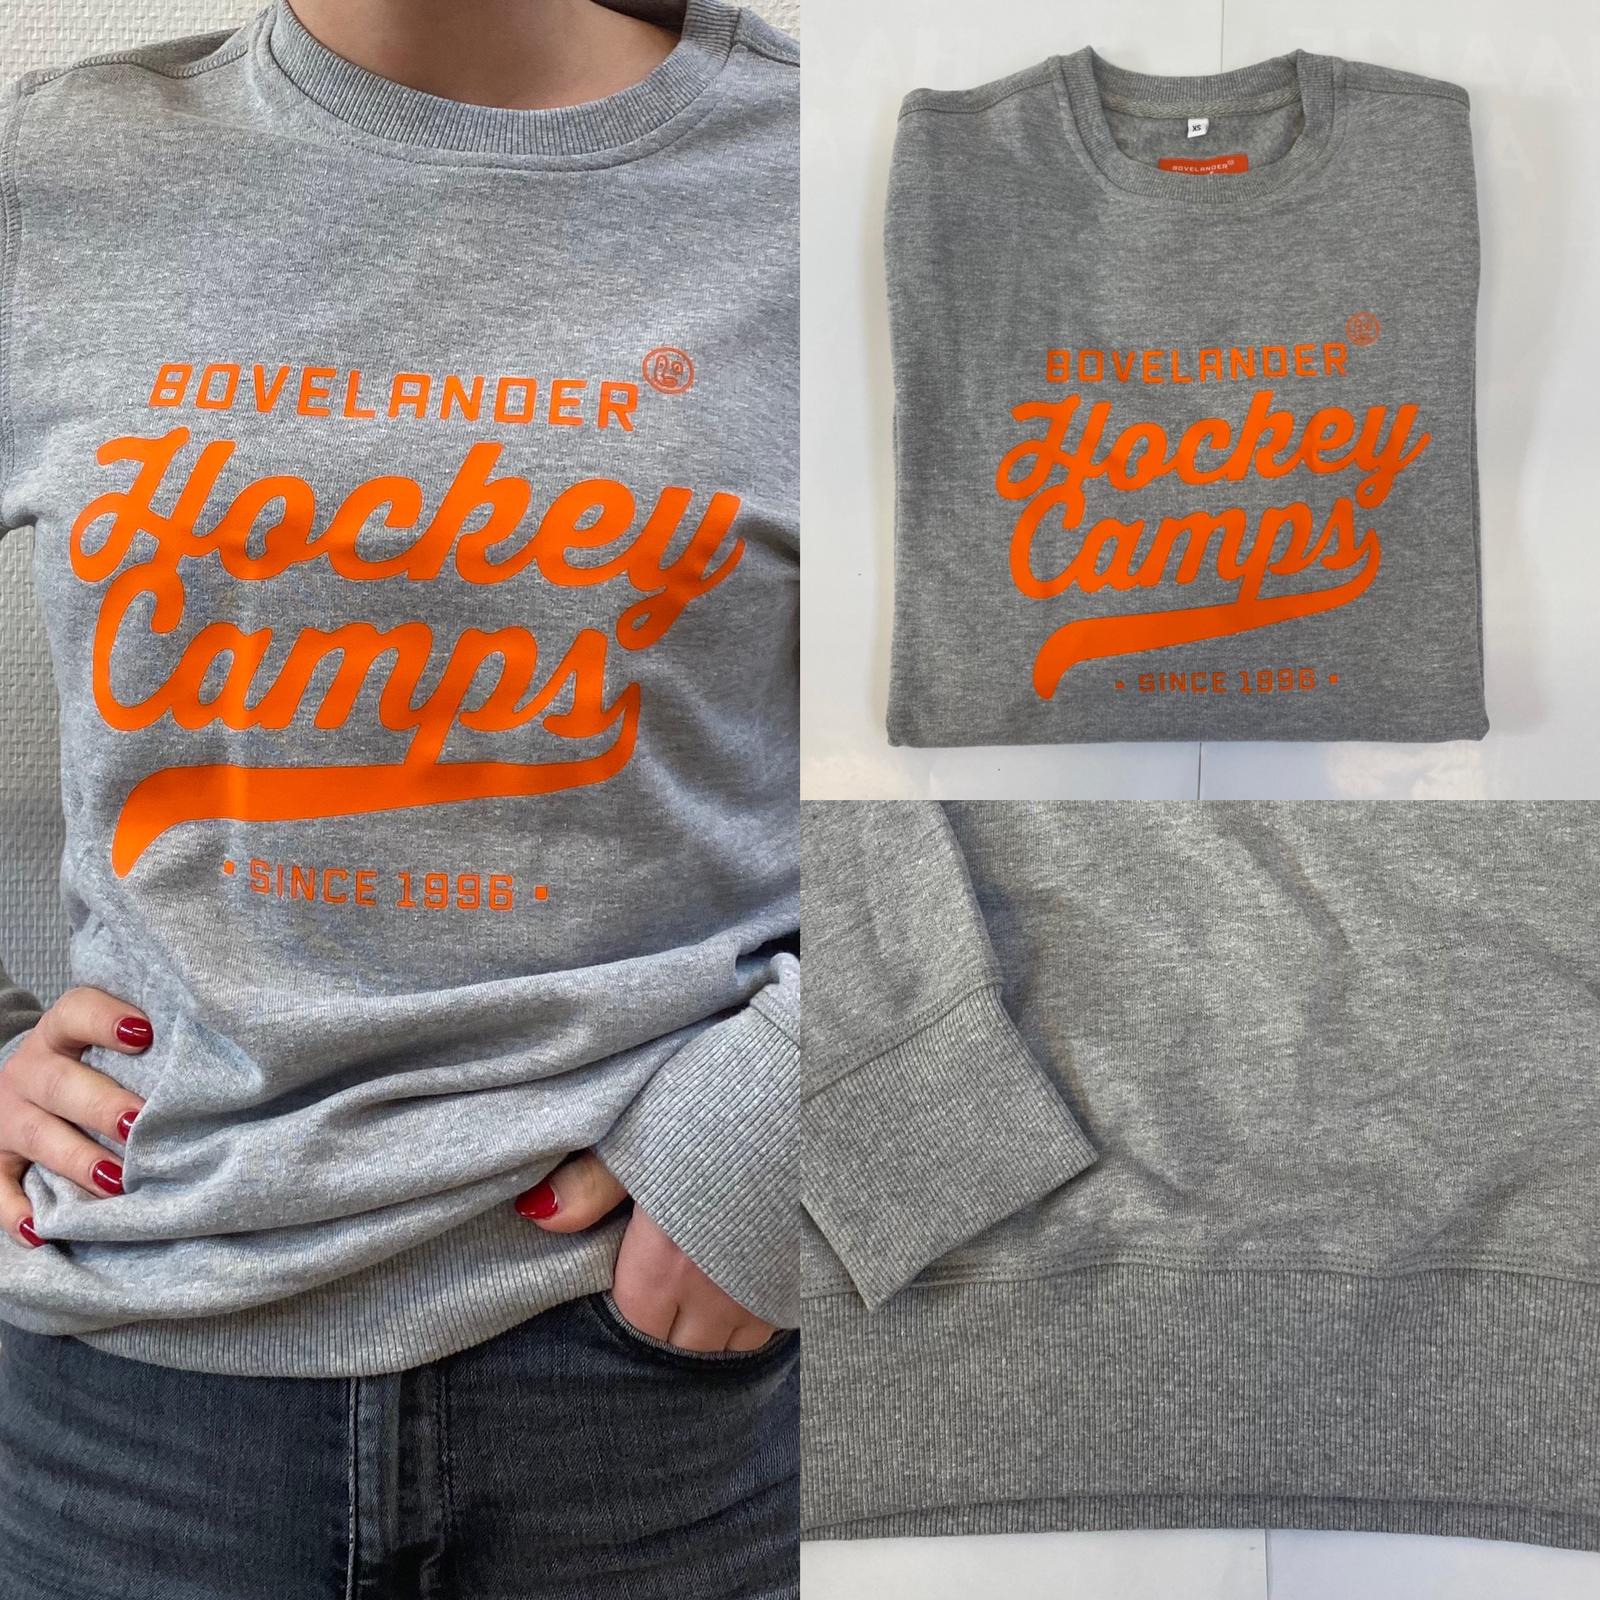 Bovelander sweater grey/orange